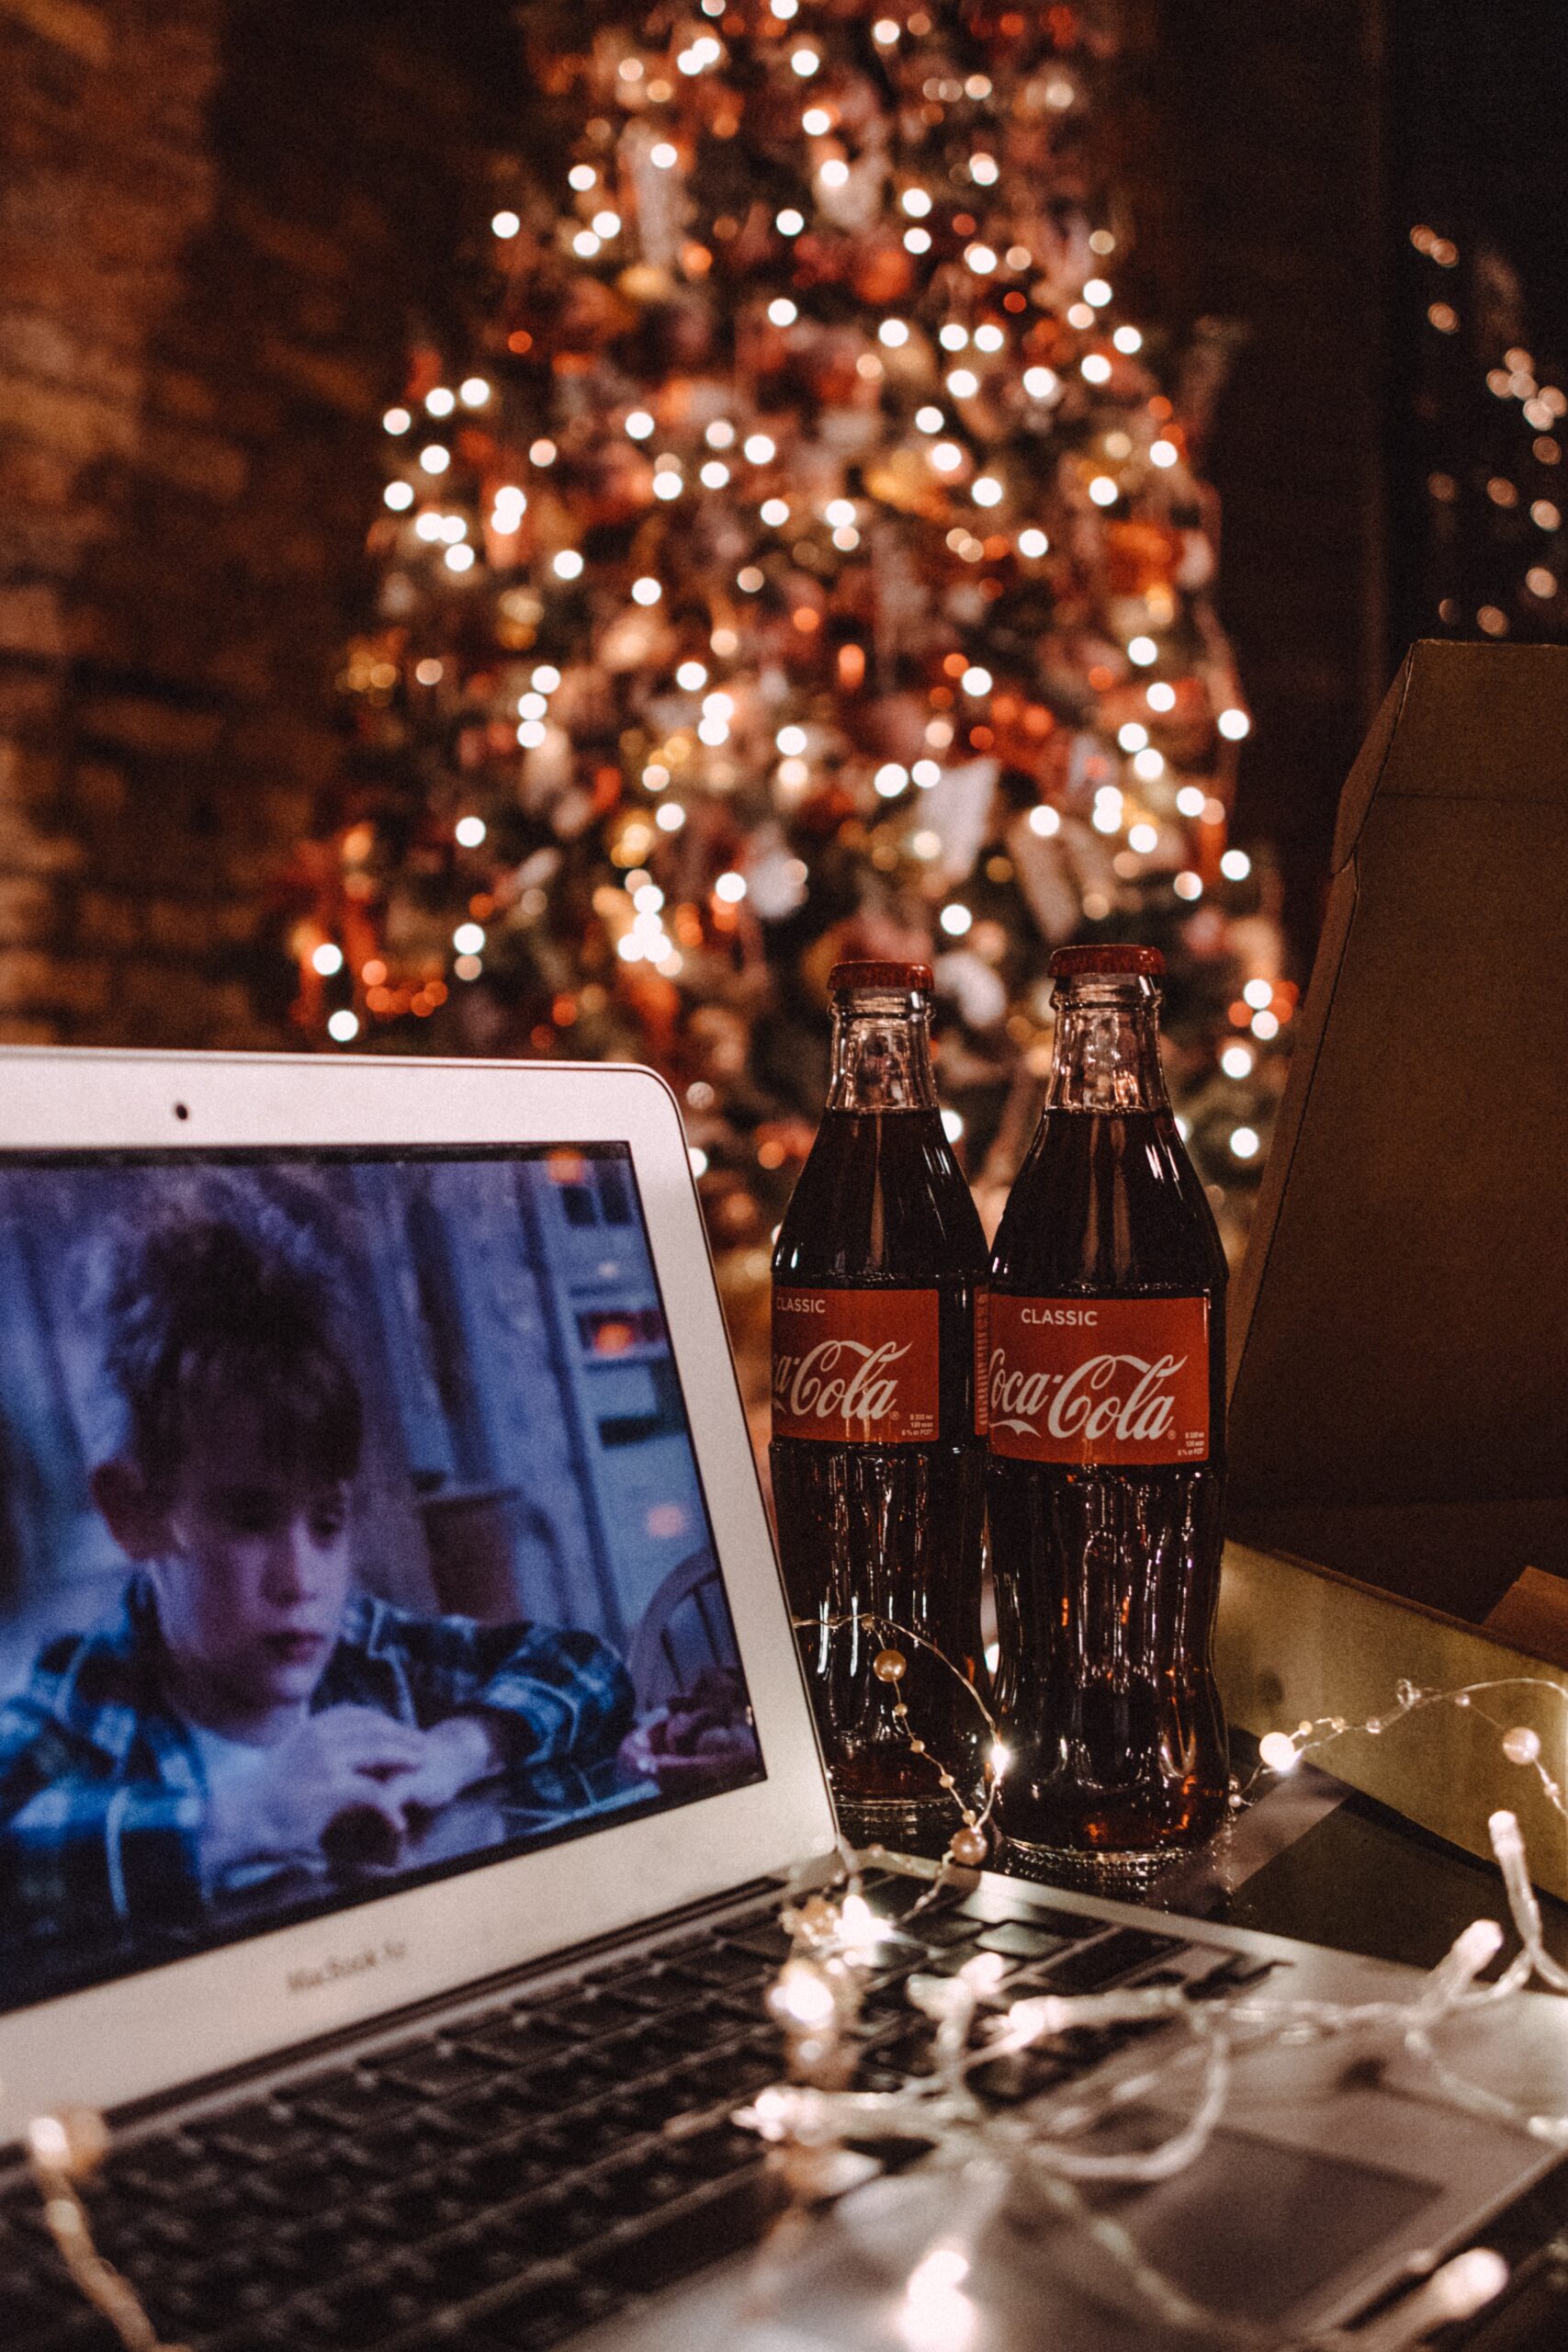 coca cola bottle beside white ipad